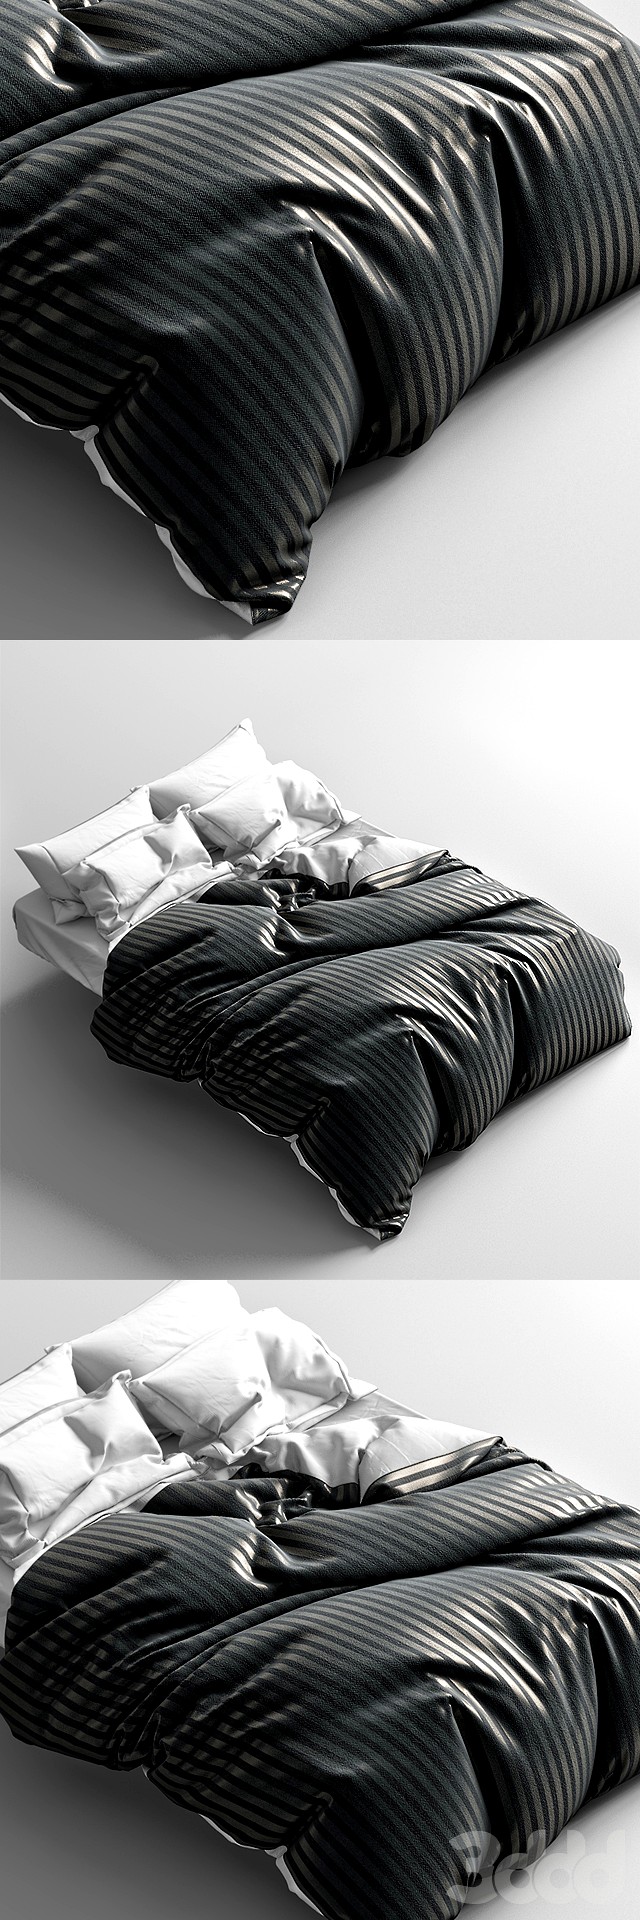 Bedclothes #4